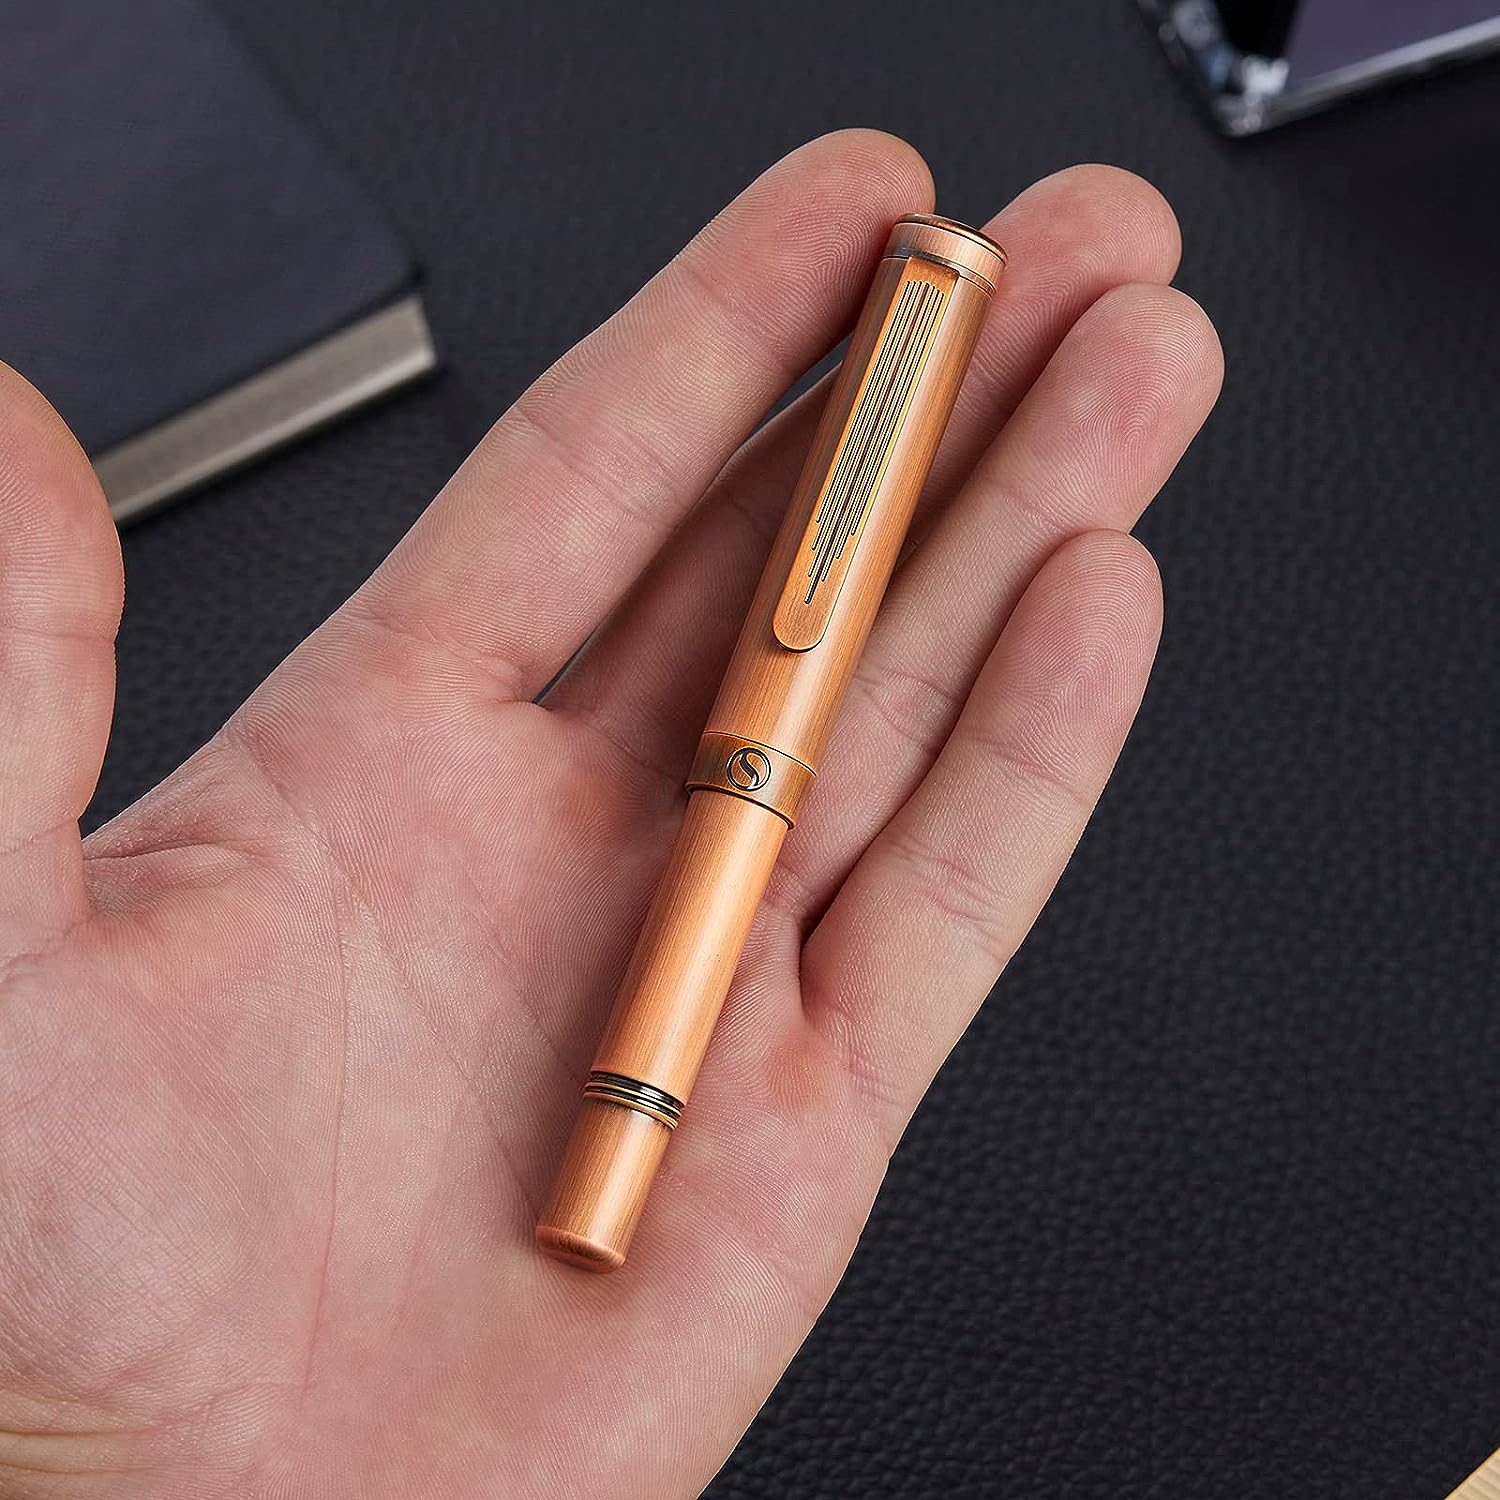 Scriveiner Luxury EDC Fountain Pen (Medium), Stunning Heavy Brass Pocket Pen, Hand Brushed Copper Finish